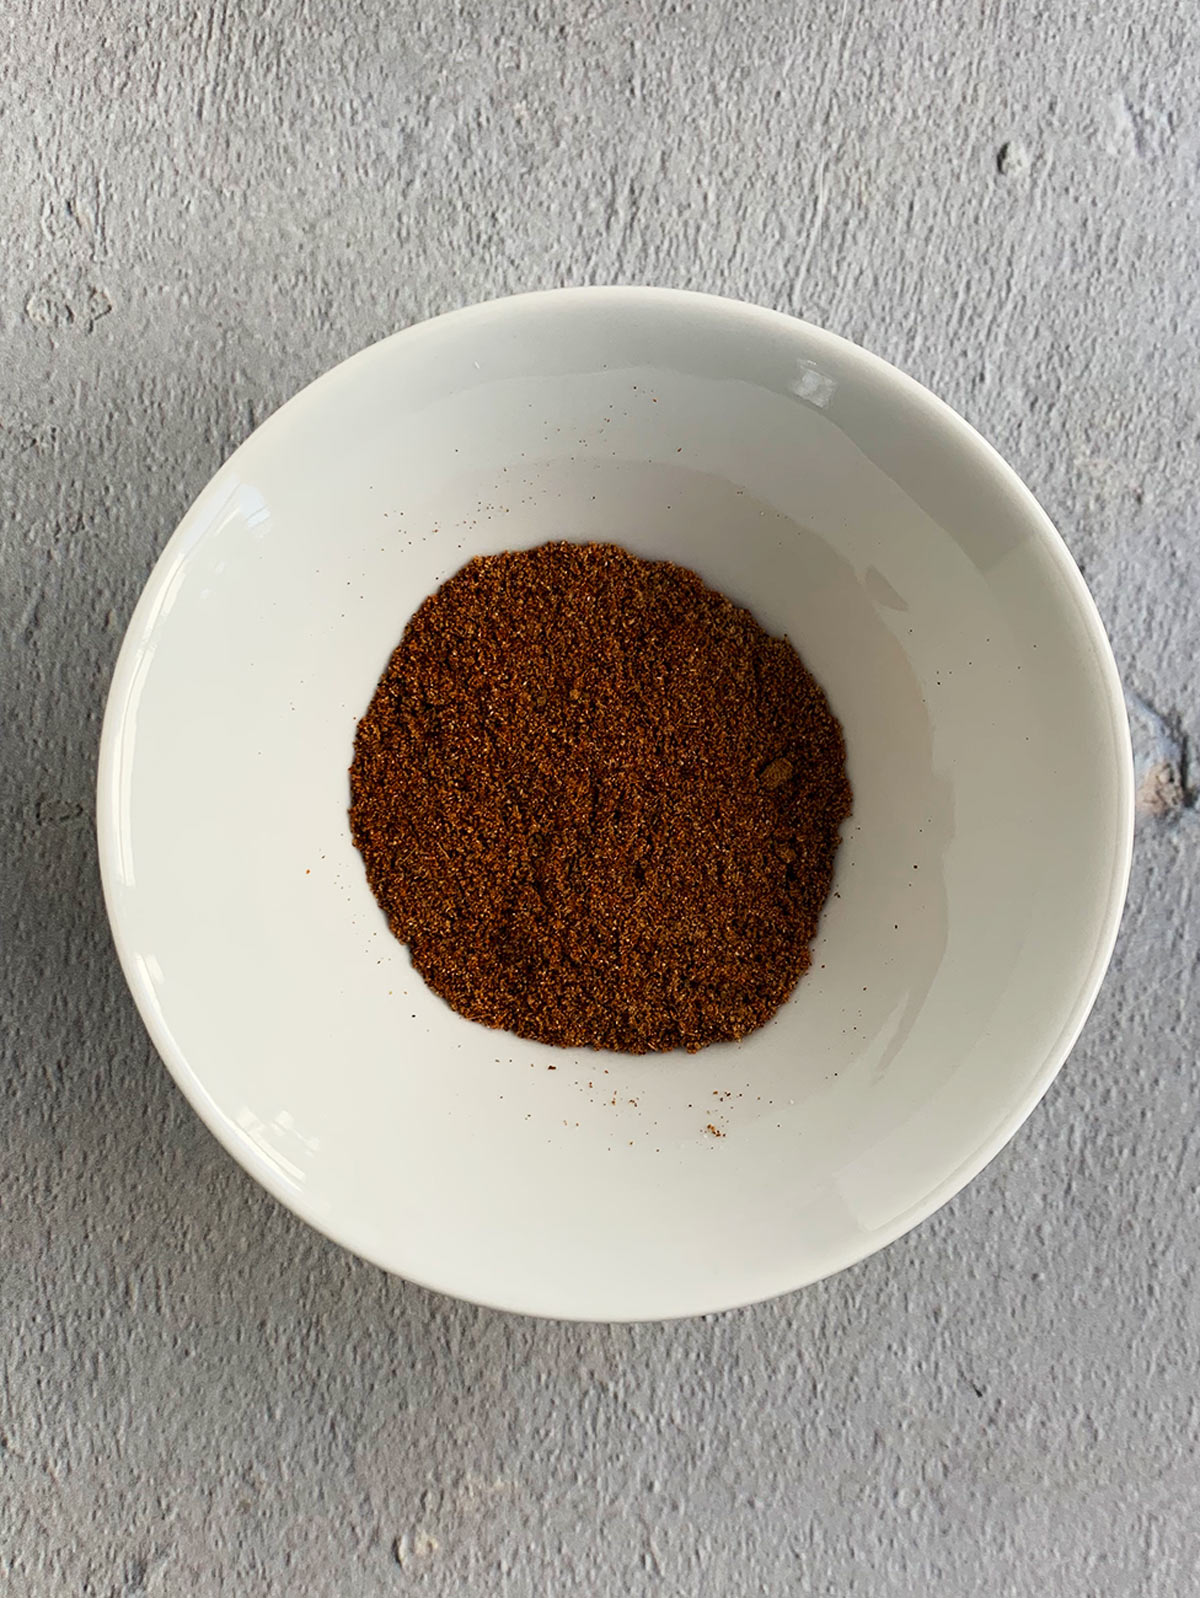 harissa spices in white bowl